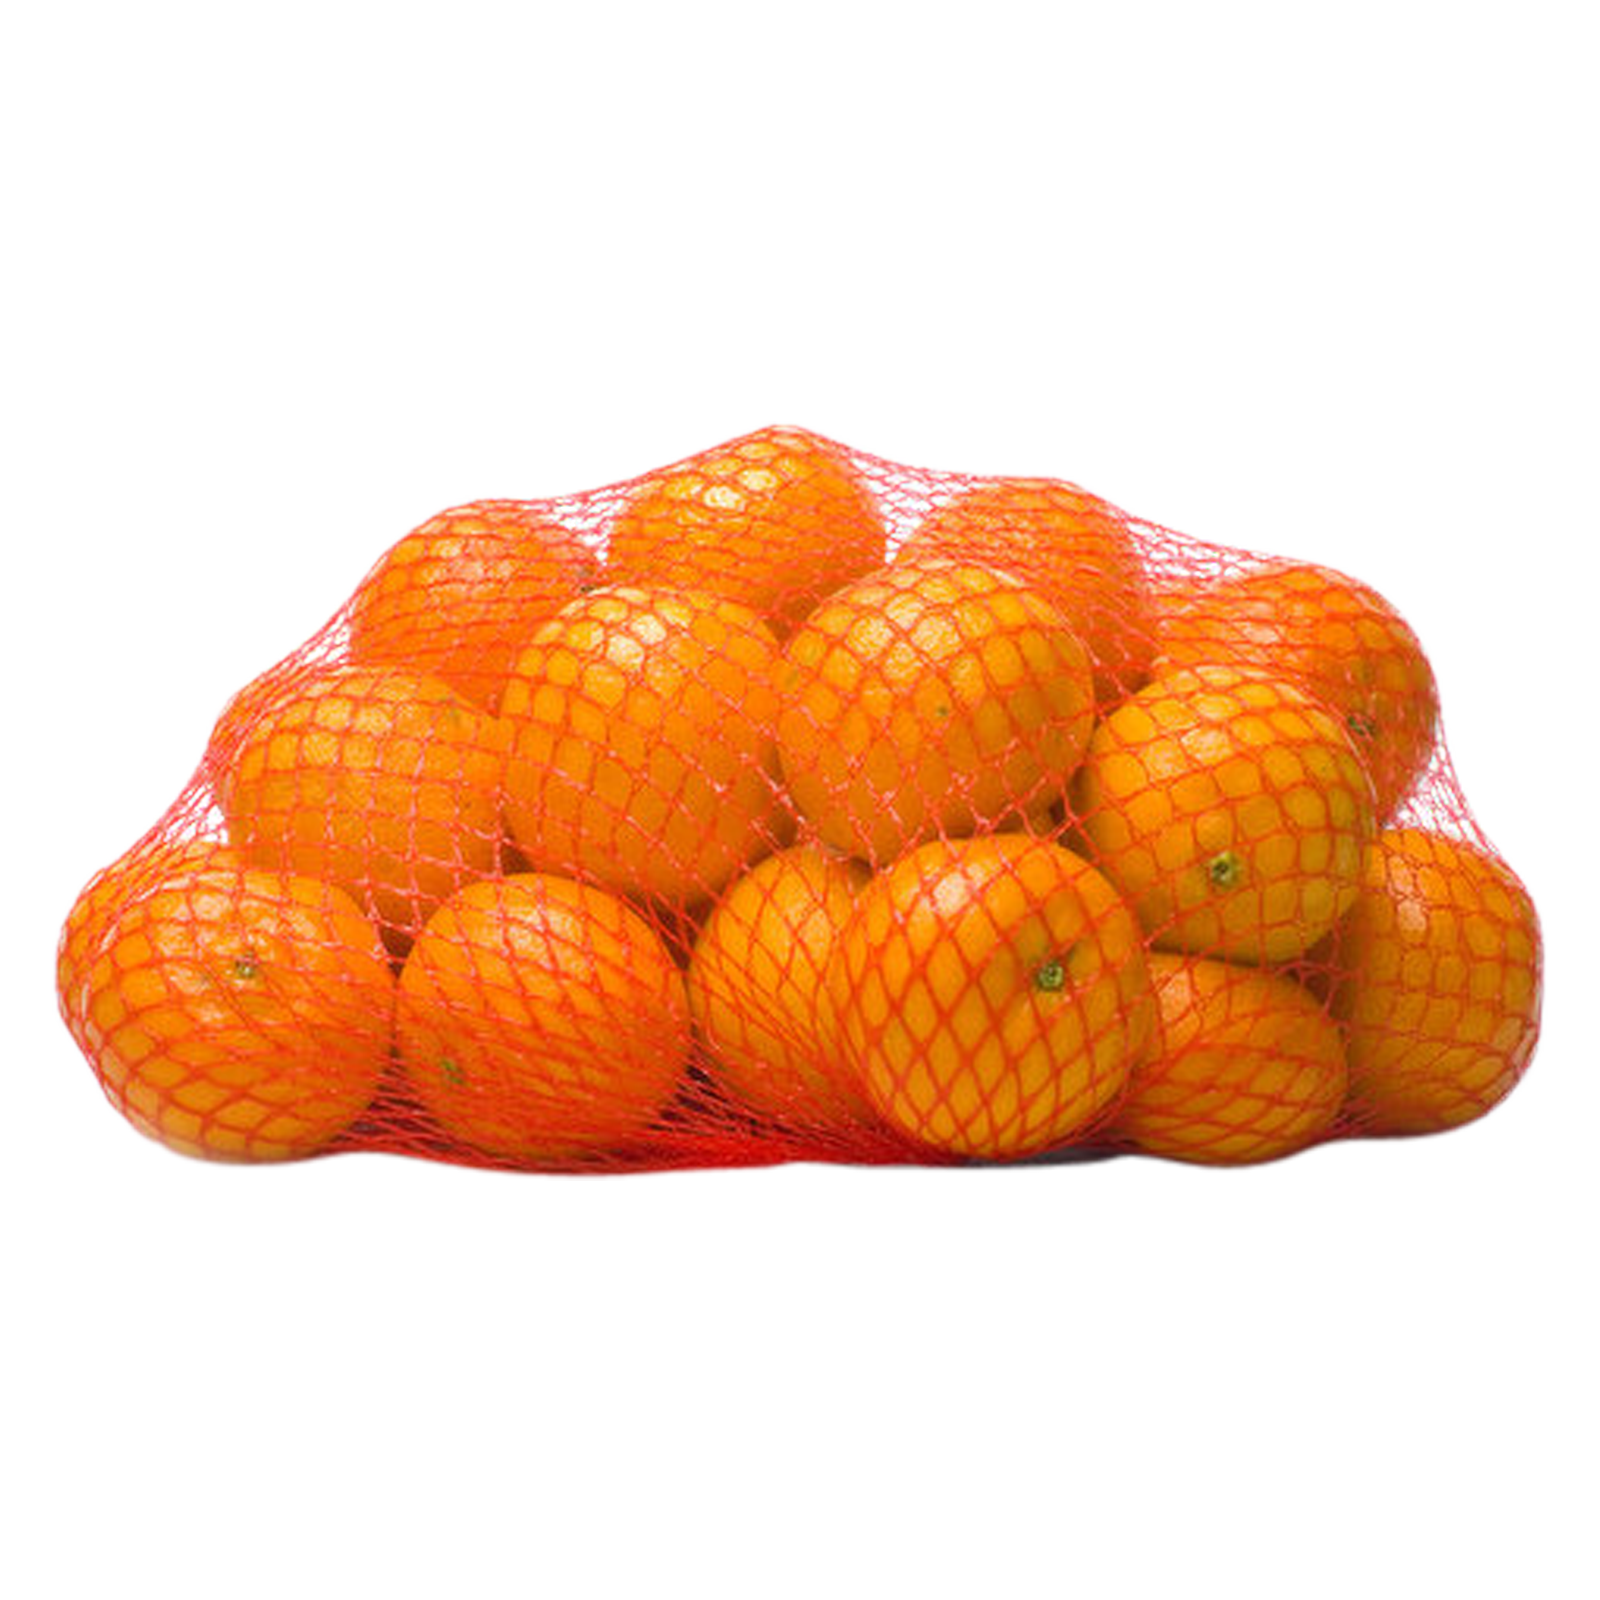 Mandarin Oranges - 3lbs 